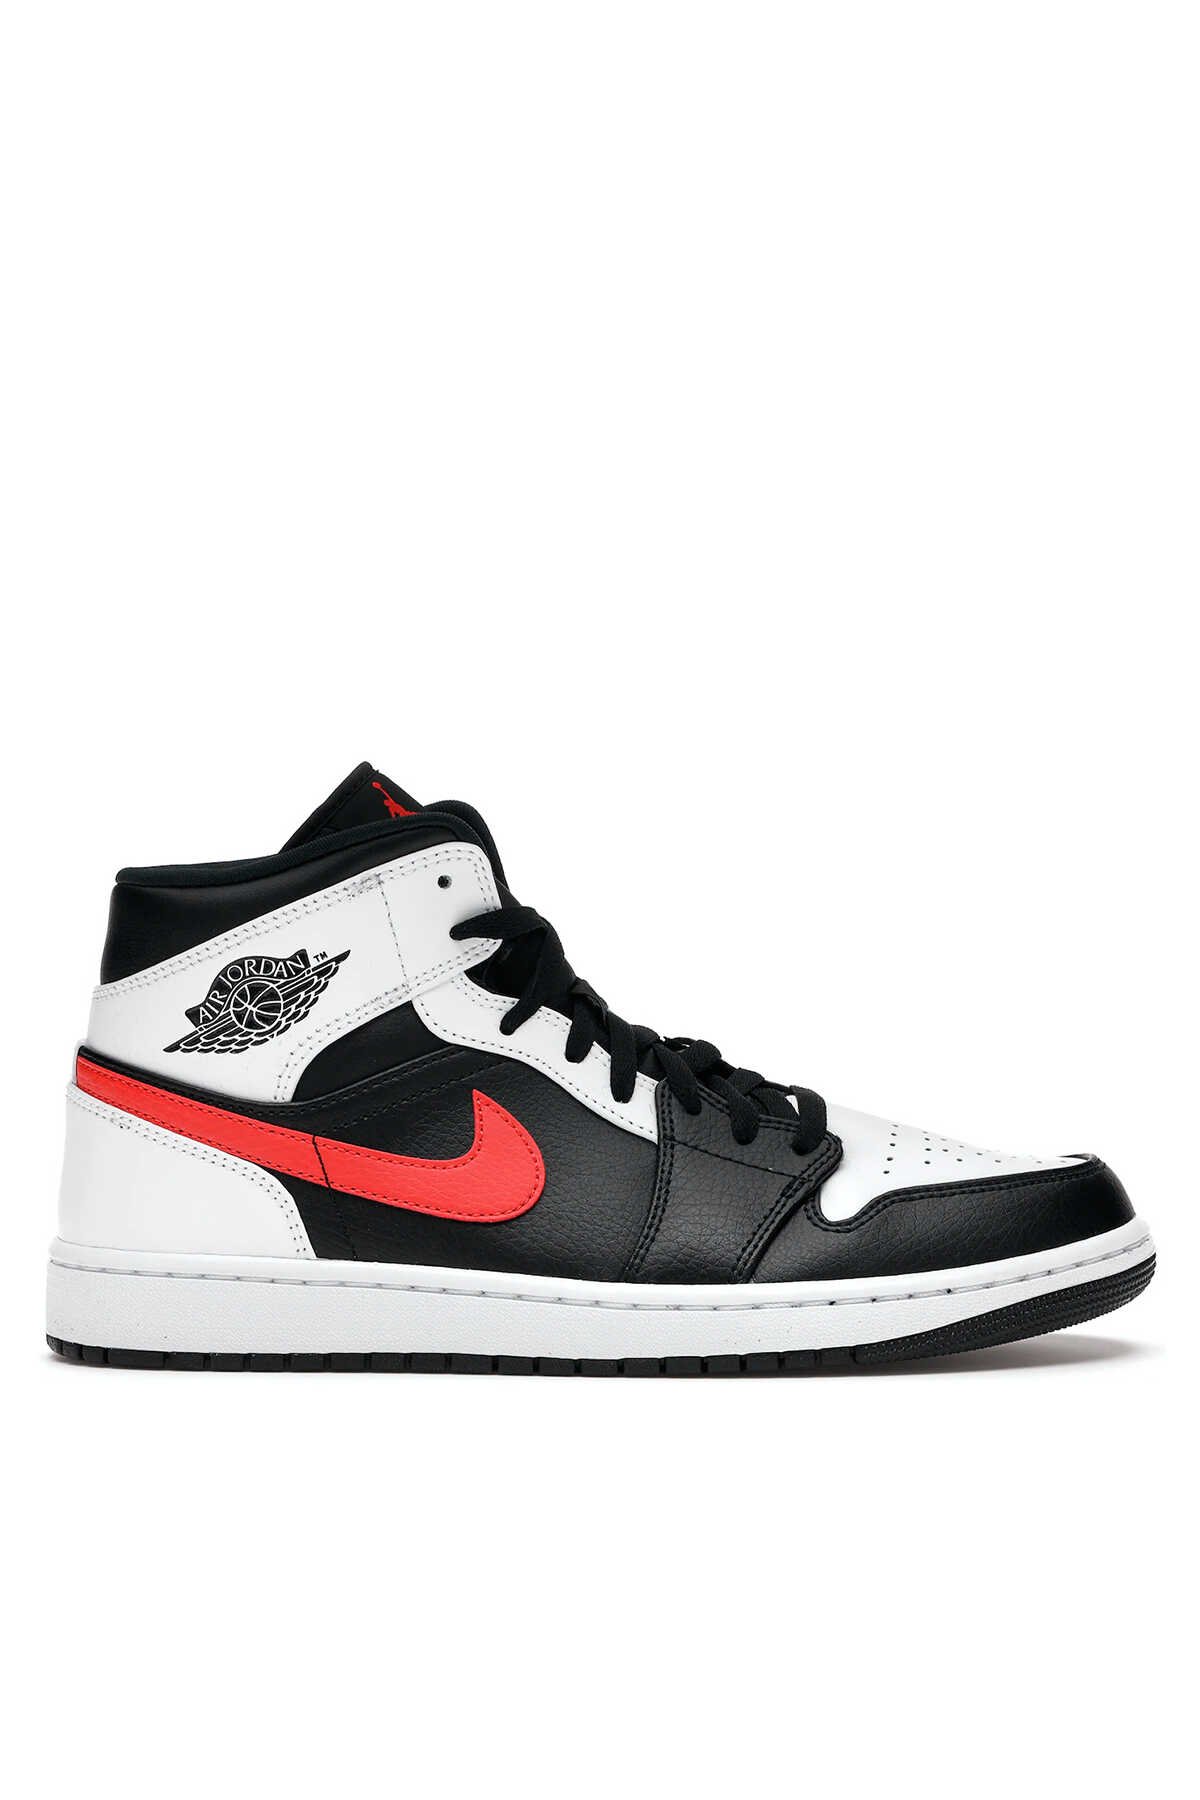 Nike - Nike Jordan 1 MidBred Toe Sneaker Unisex Ayakkabı Beyaz / Siyah